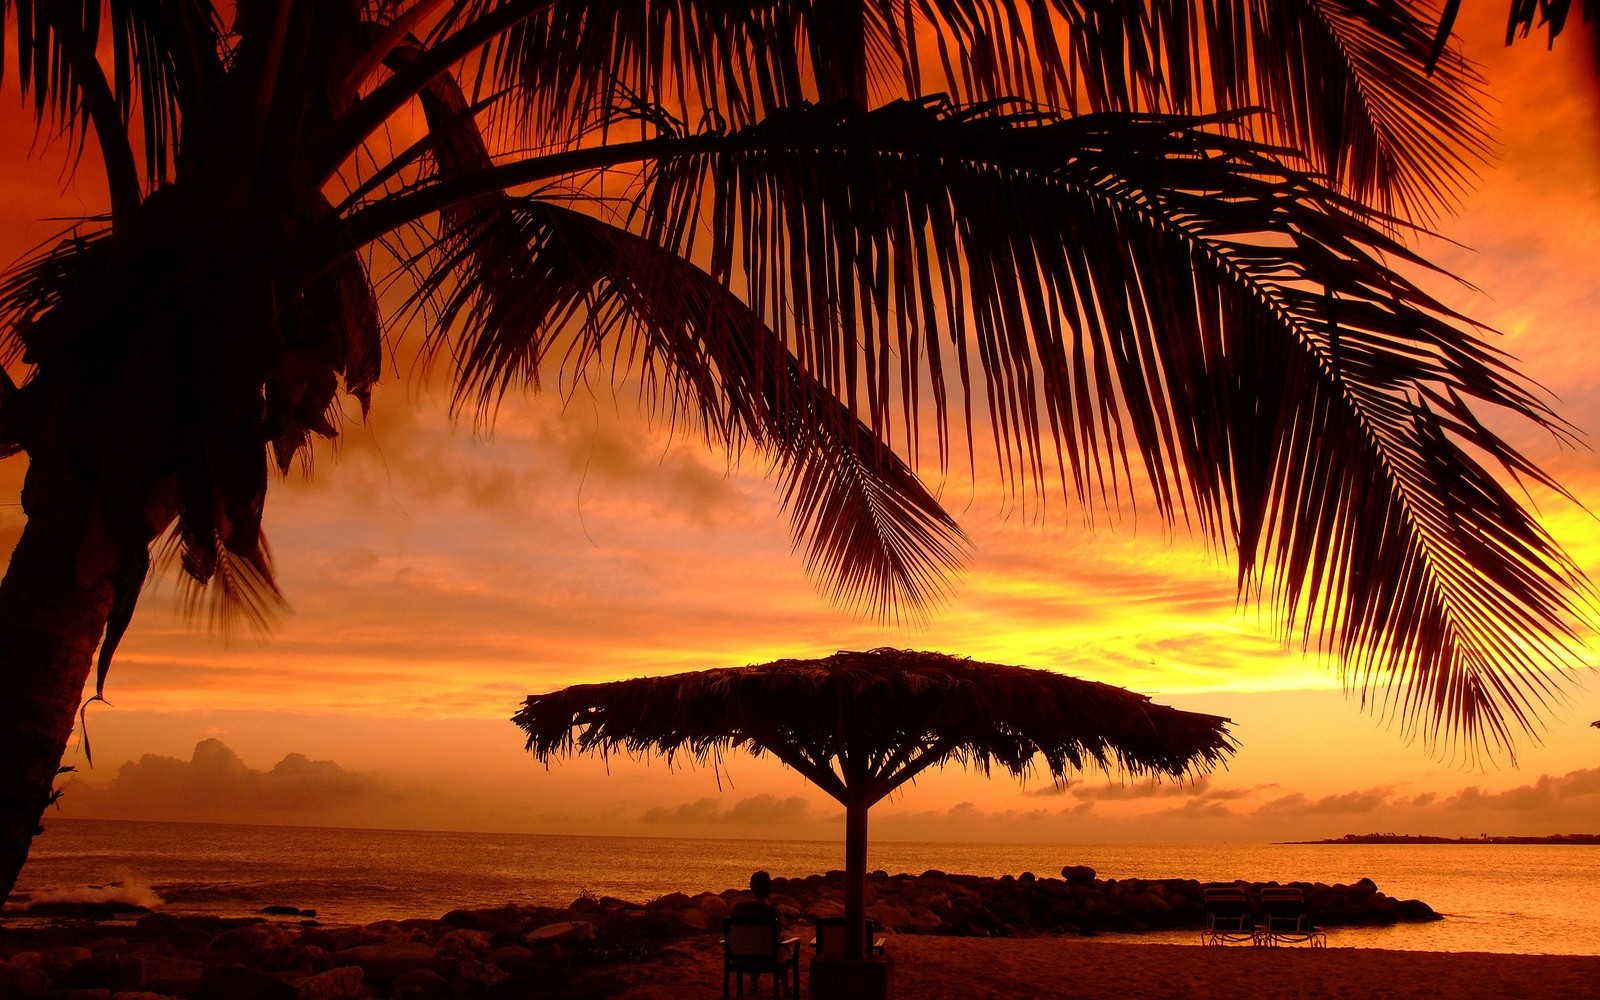 General 1600x1000 nature sunset umbrella beach palm trees sea clouds sky orange sky sunlight beach umbrella